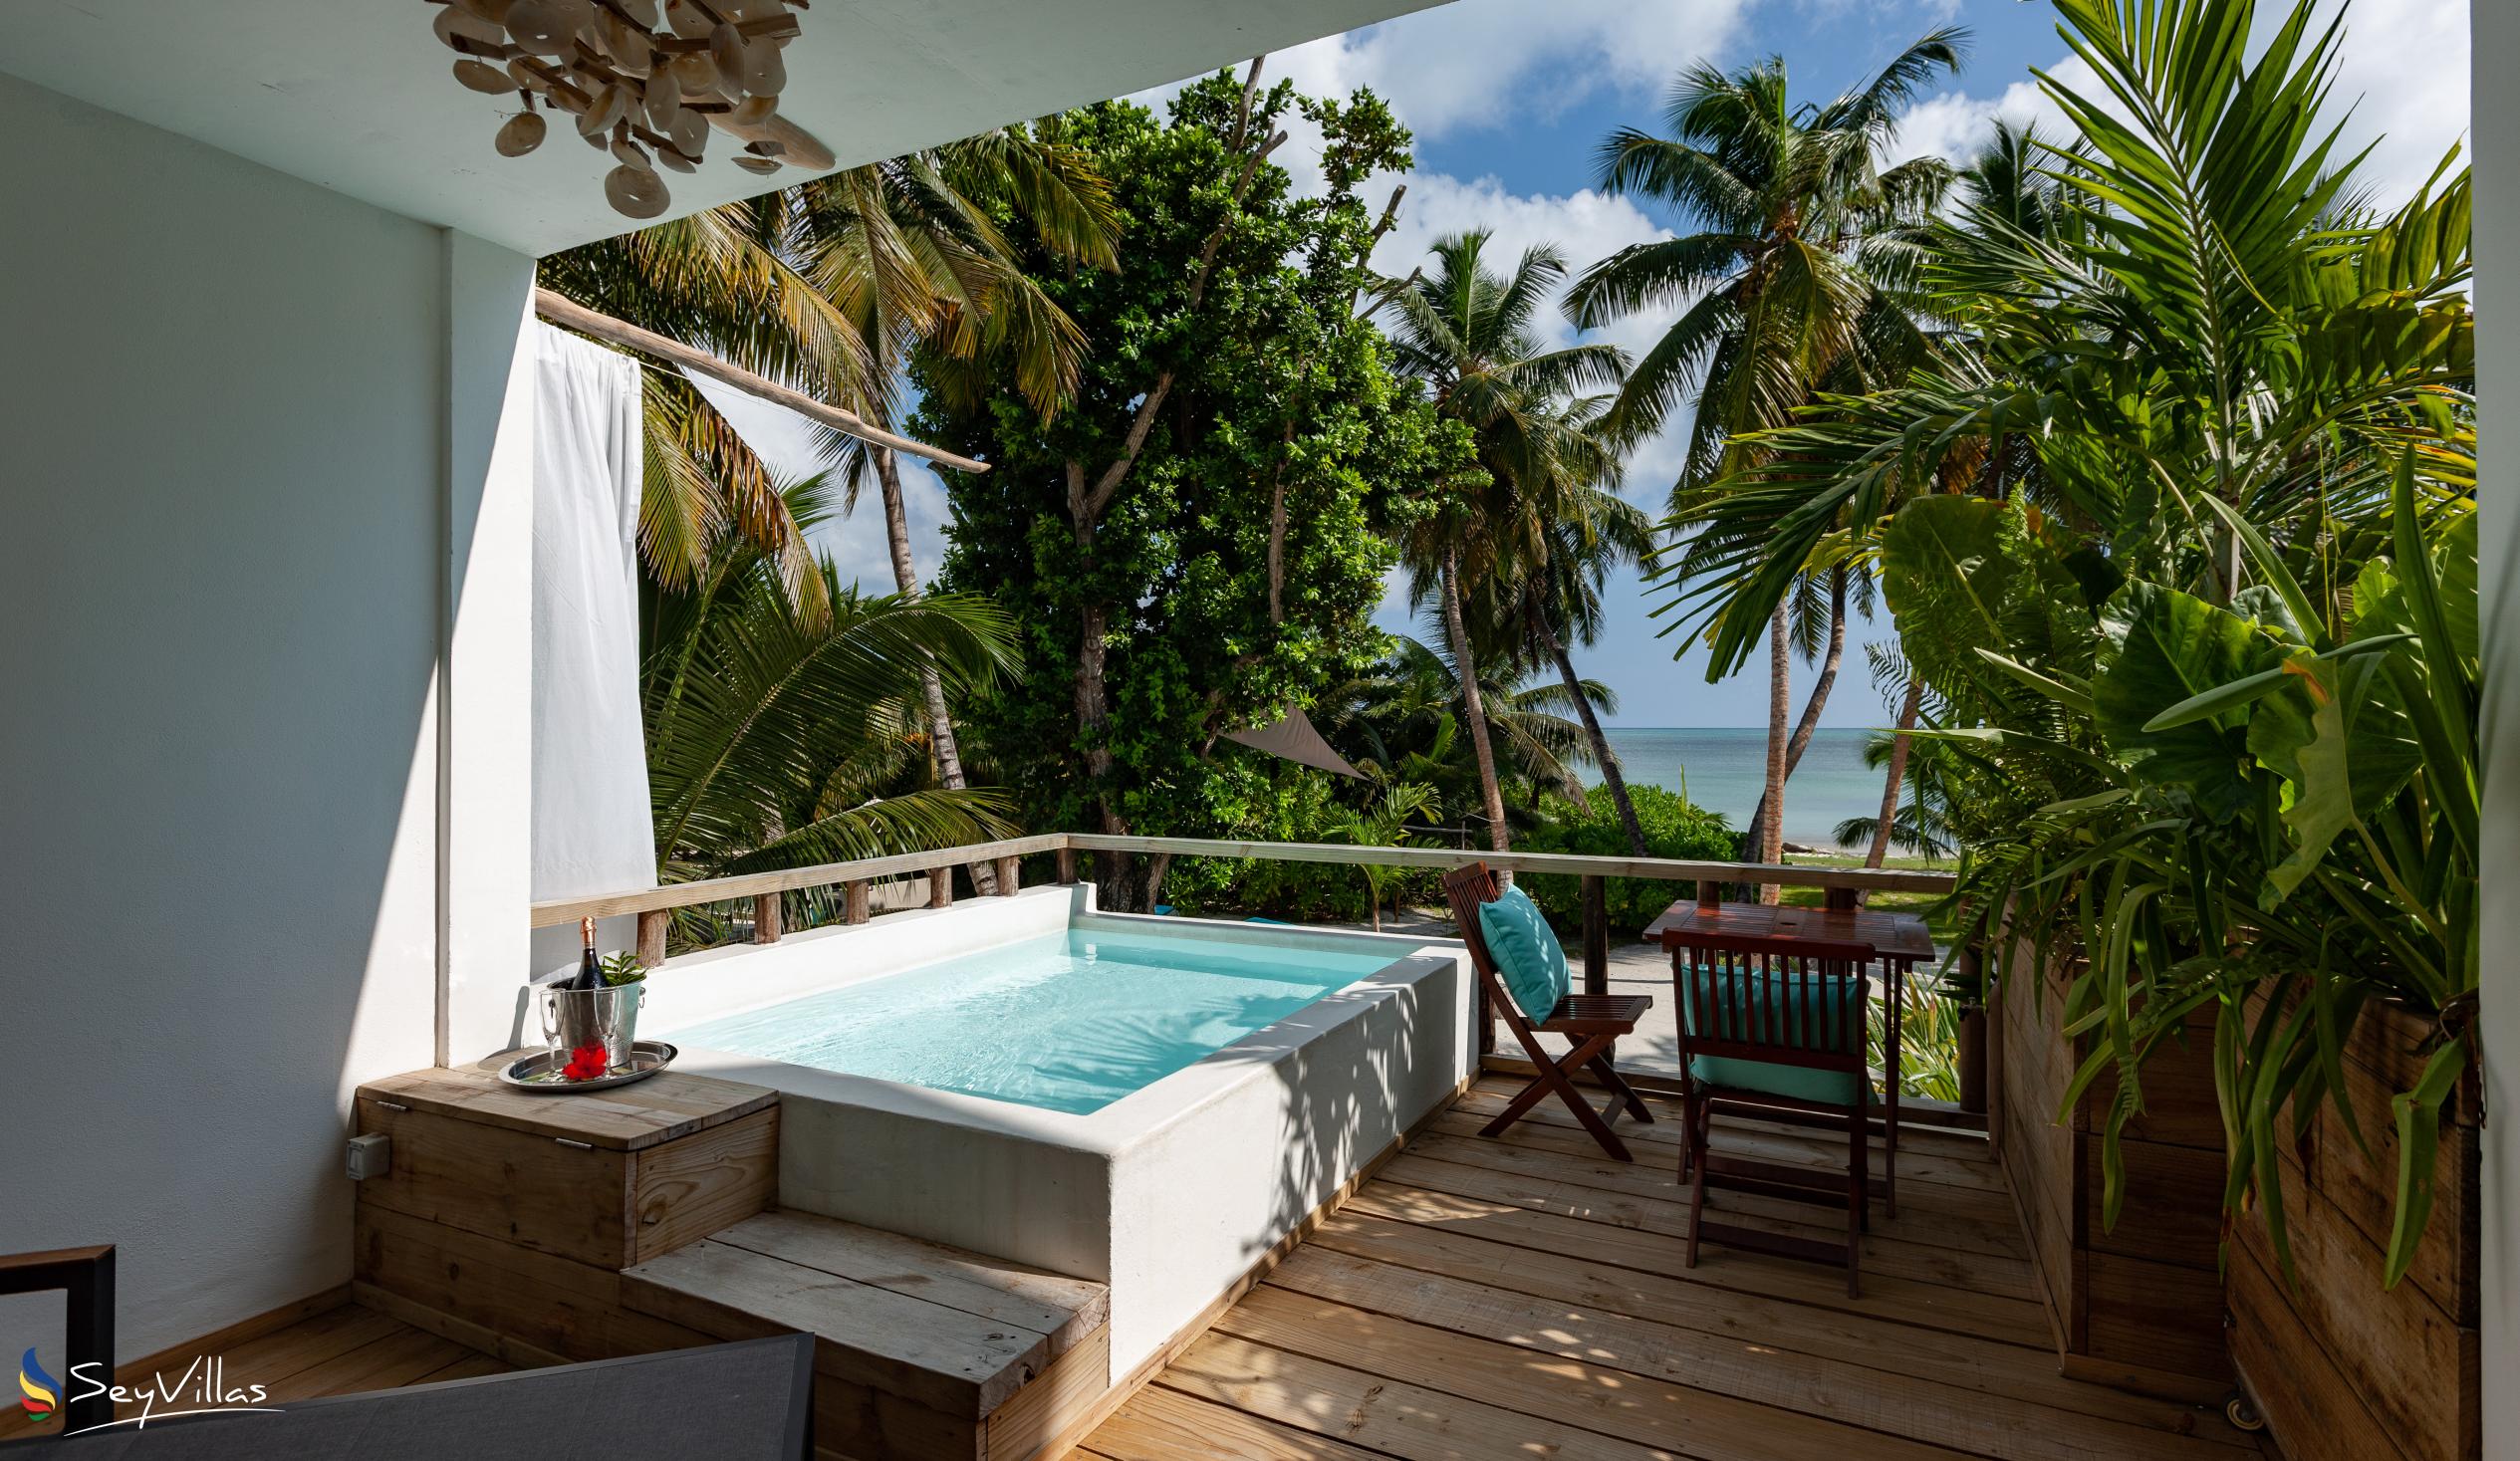 Photo 101: Bliss Hotel Praslin - Beach House - Beach Deluxe Room - Praslin (Seychelles)